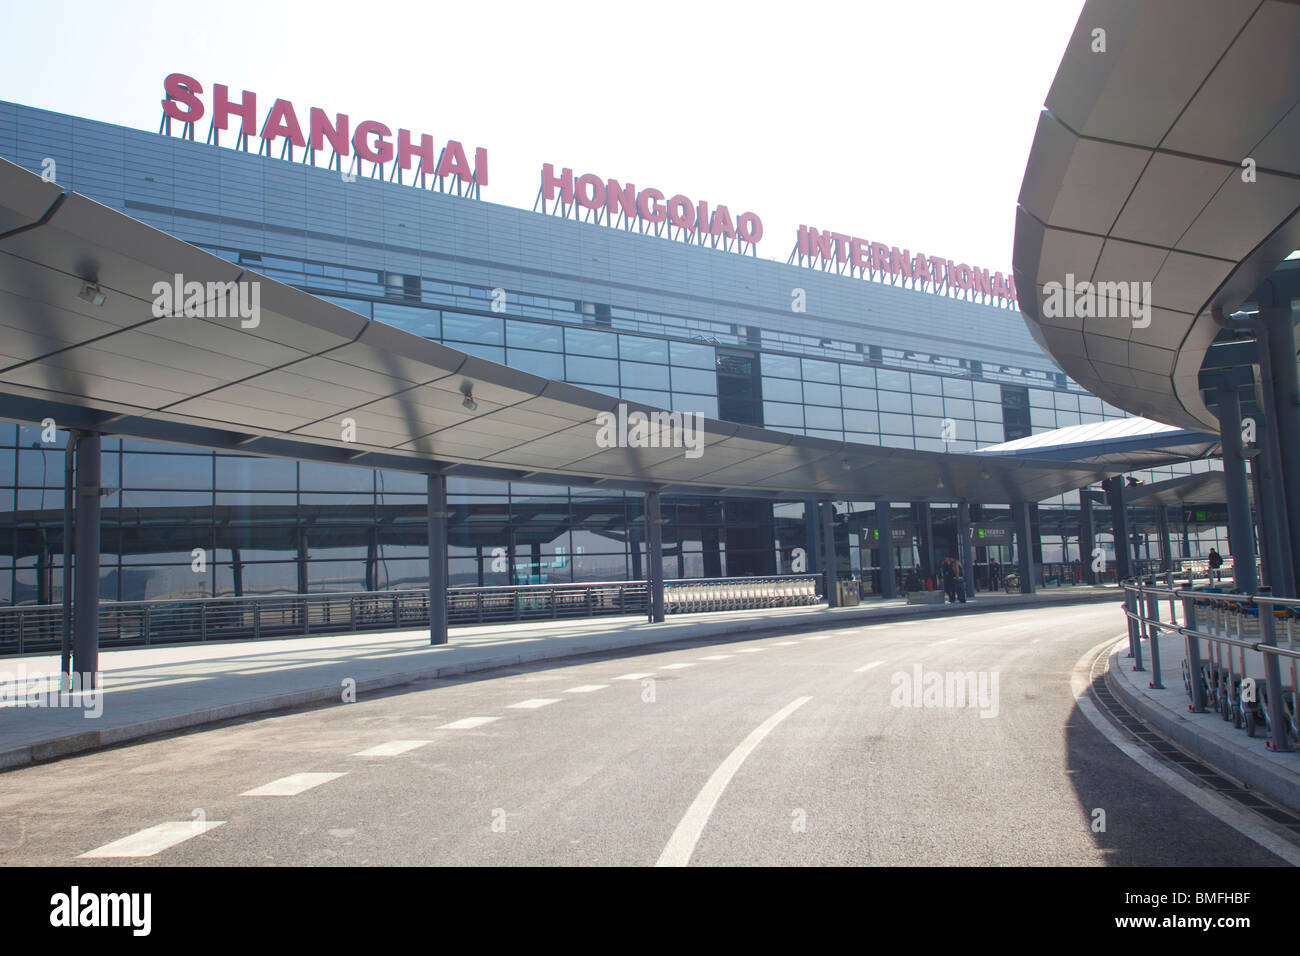 Shanghai Hongqiao Airport 上海虹桥国际机场 is a 5-Star Airport